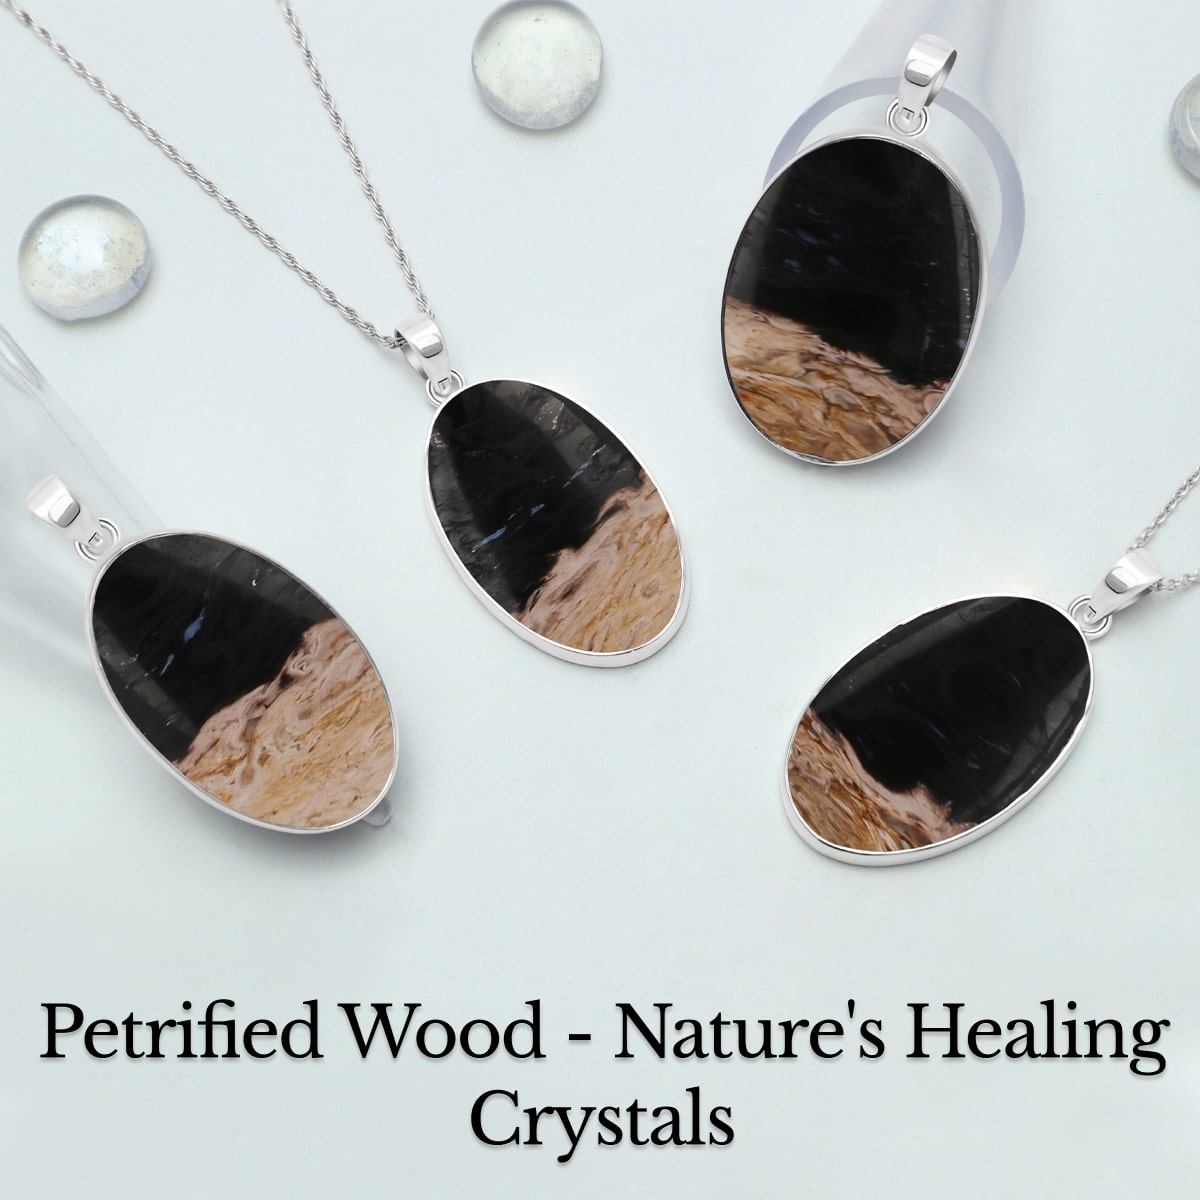 Healing Properties of Petrified Wood Crystal